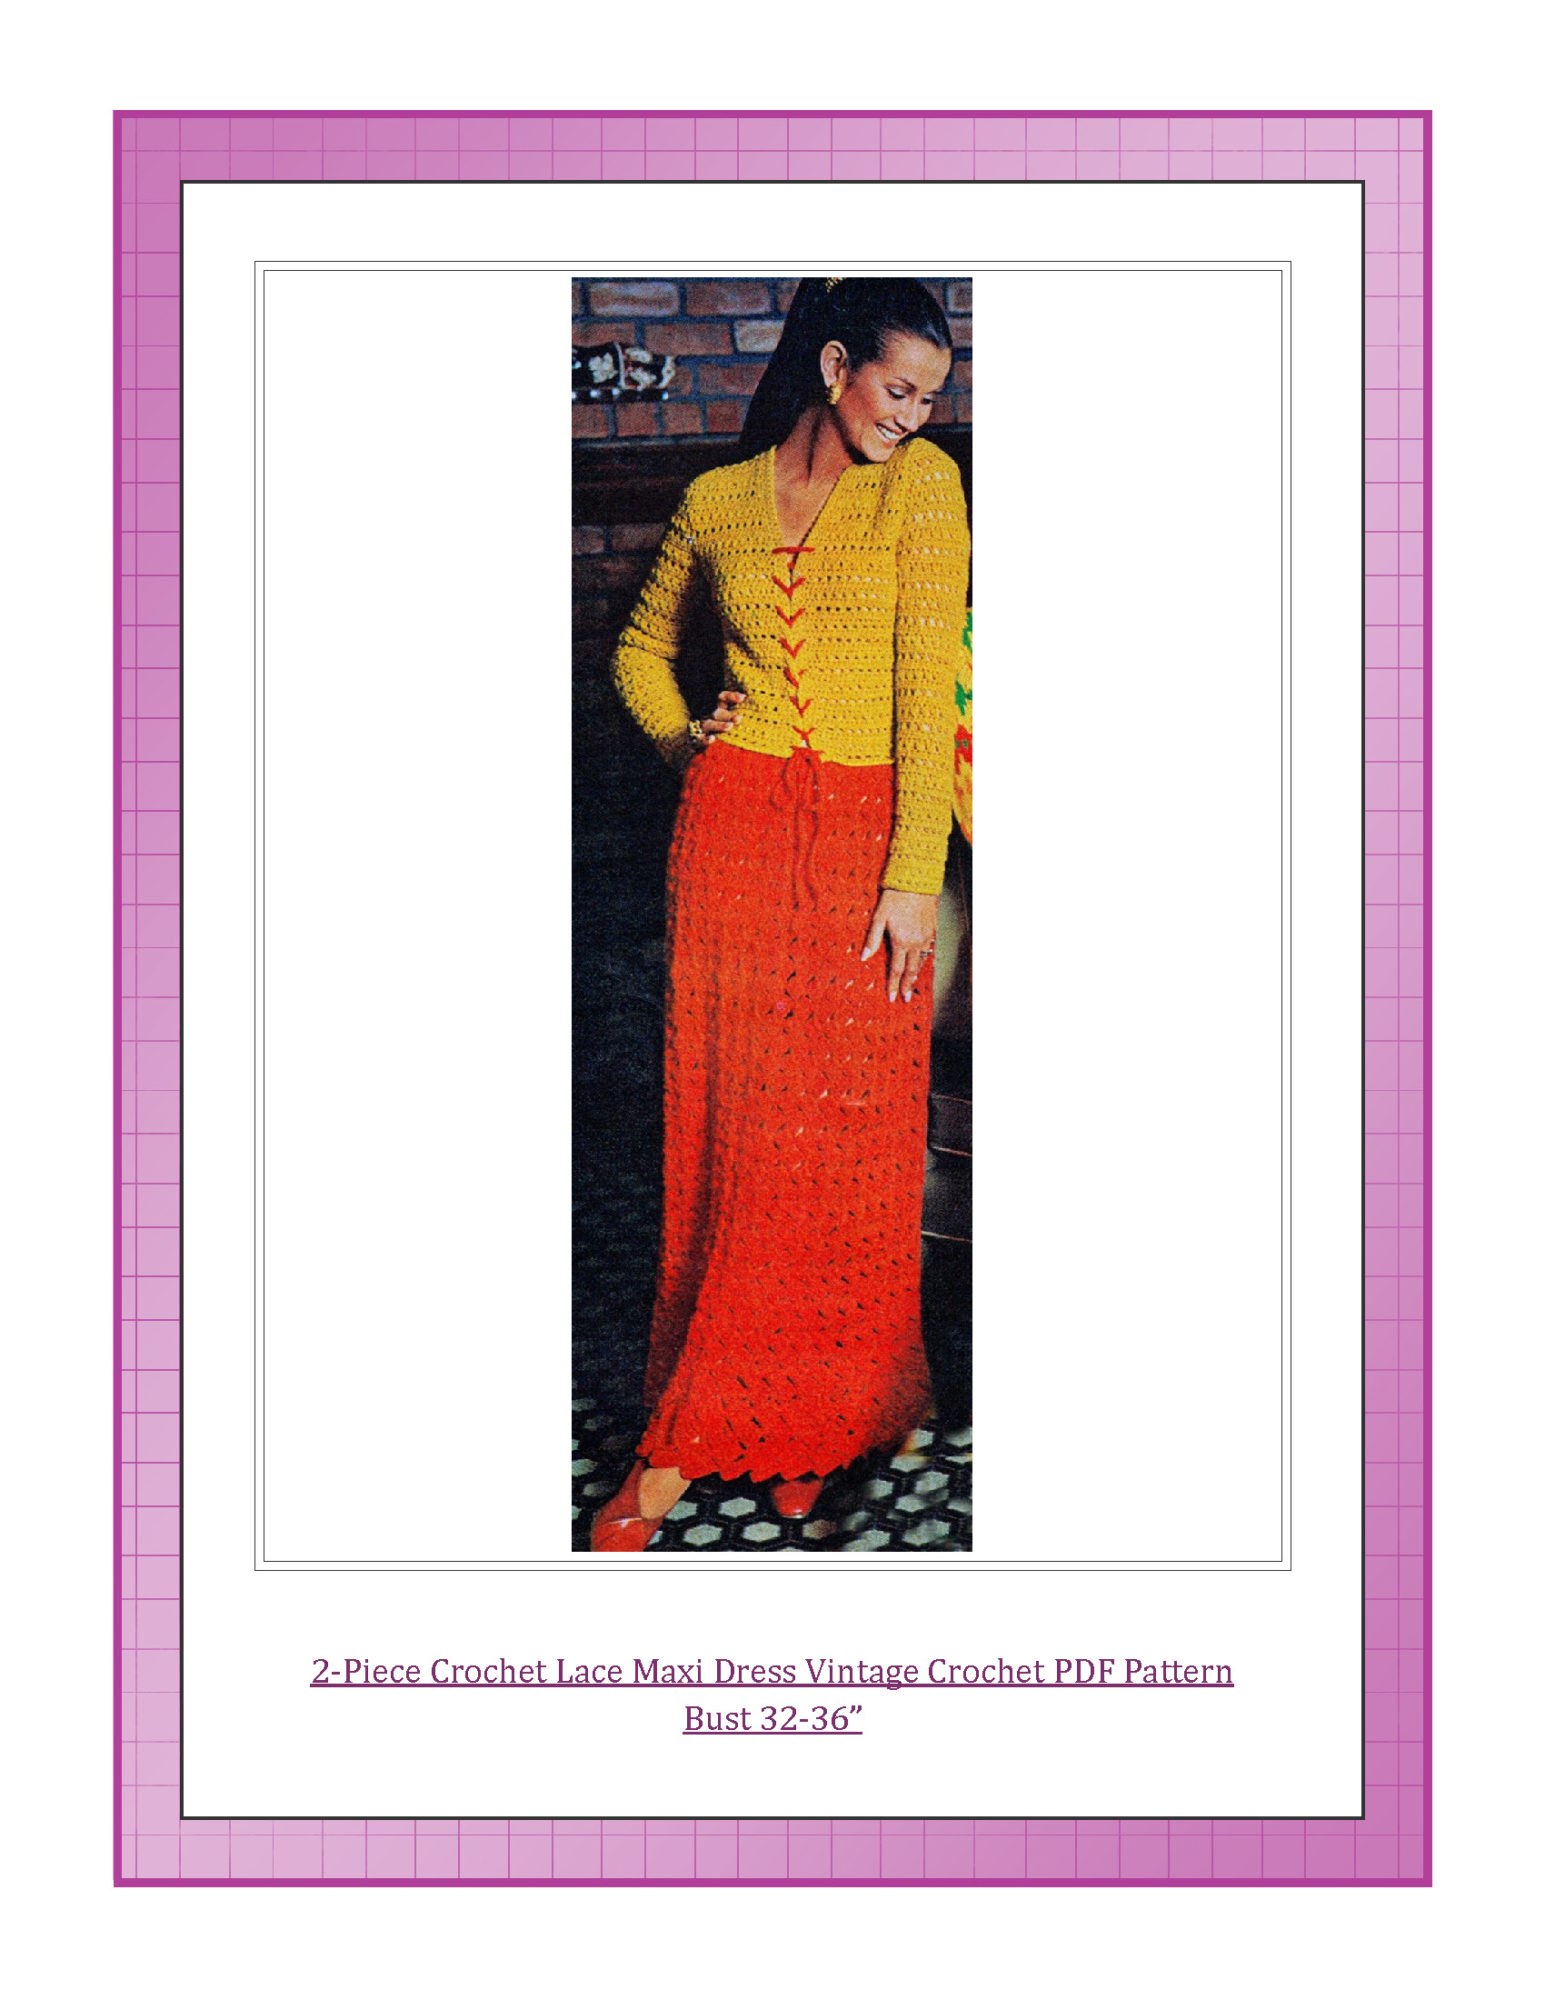 2-Piece Crochet Lace Maxi Dress Vintage Crochet PDF Pattern Bust 32-36”